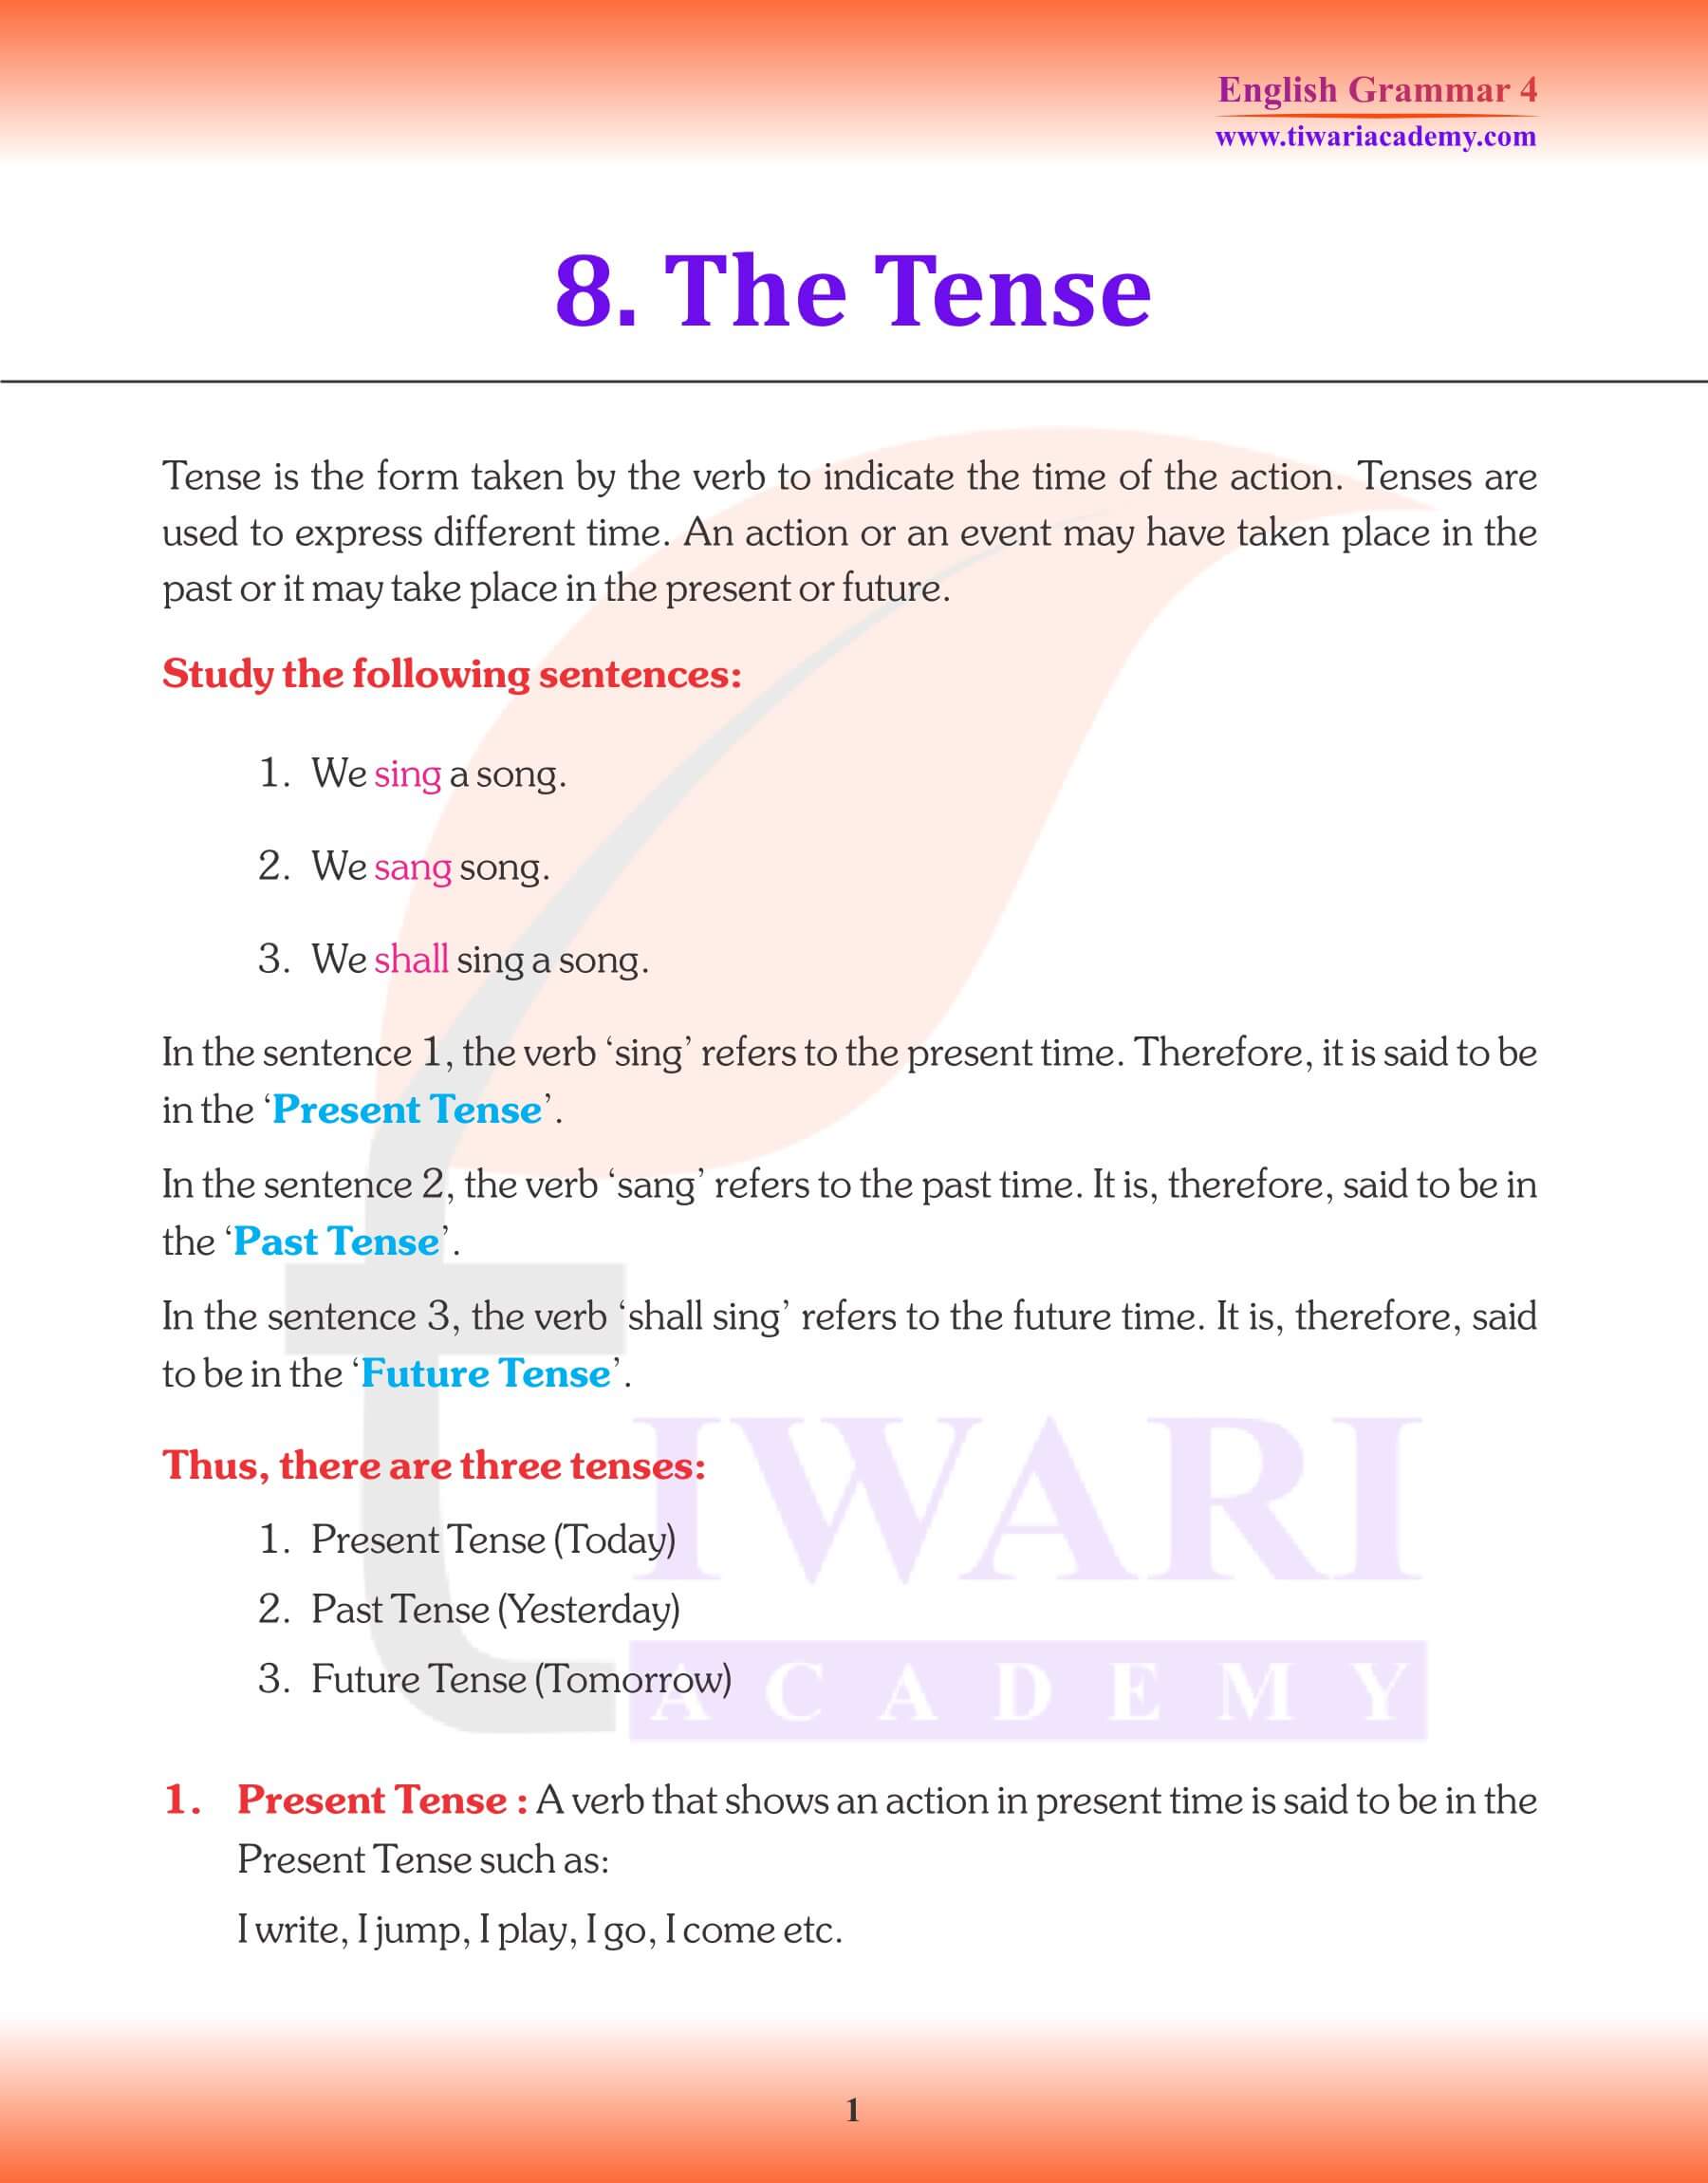 Class 4 English Grammar Tense Revision Book